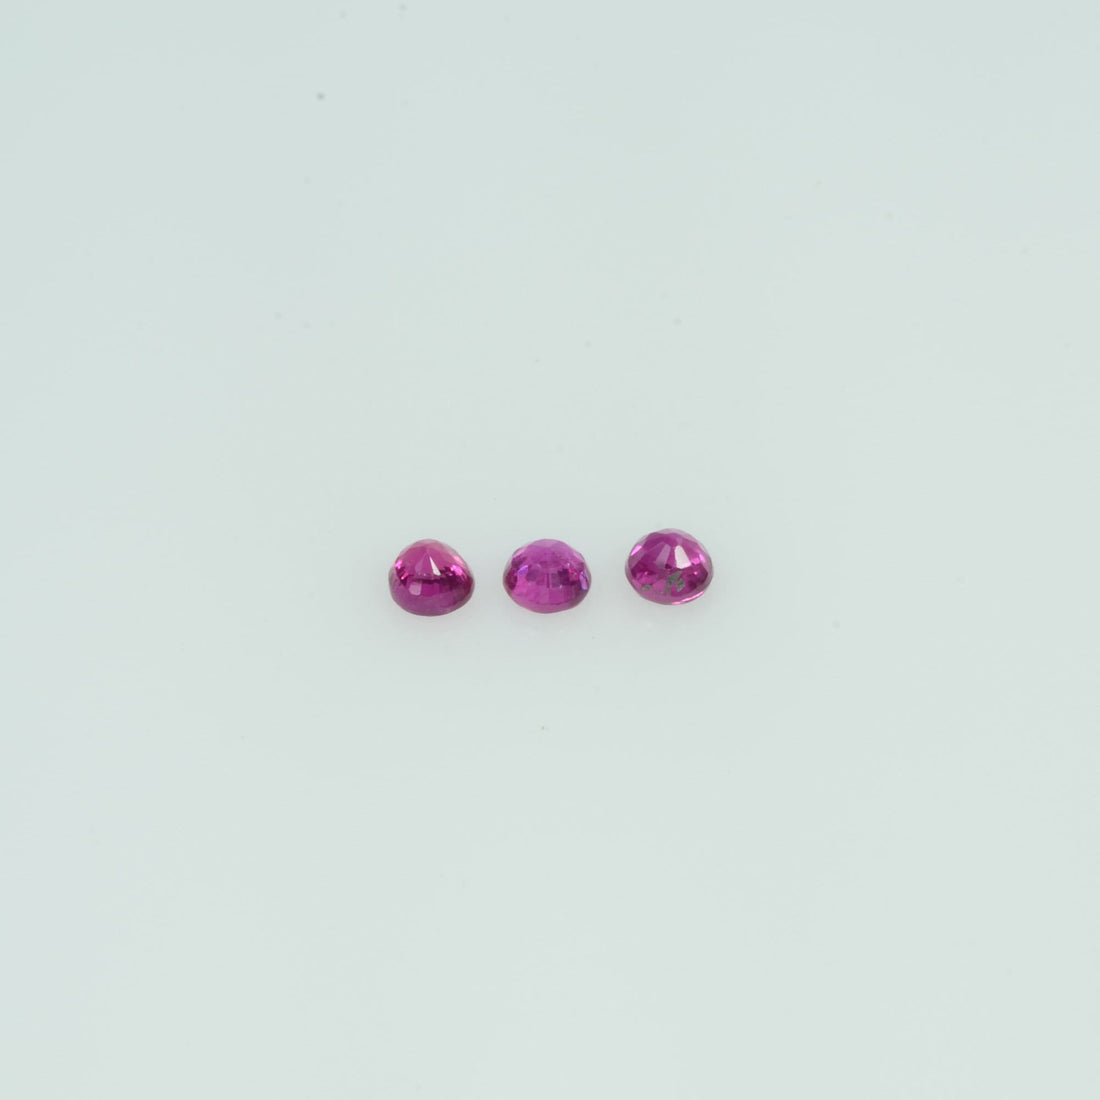 1.3-2.6 mm Natural Ruby Loose Gemstone Round Cut